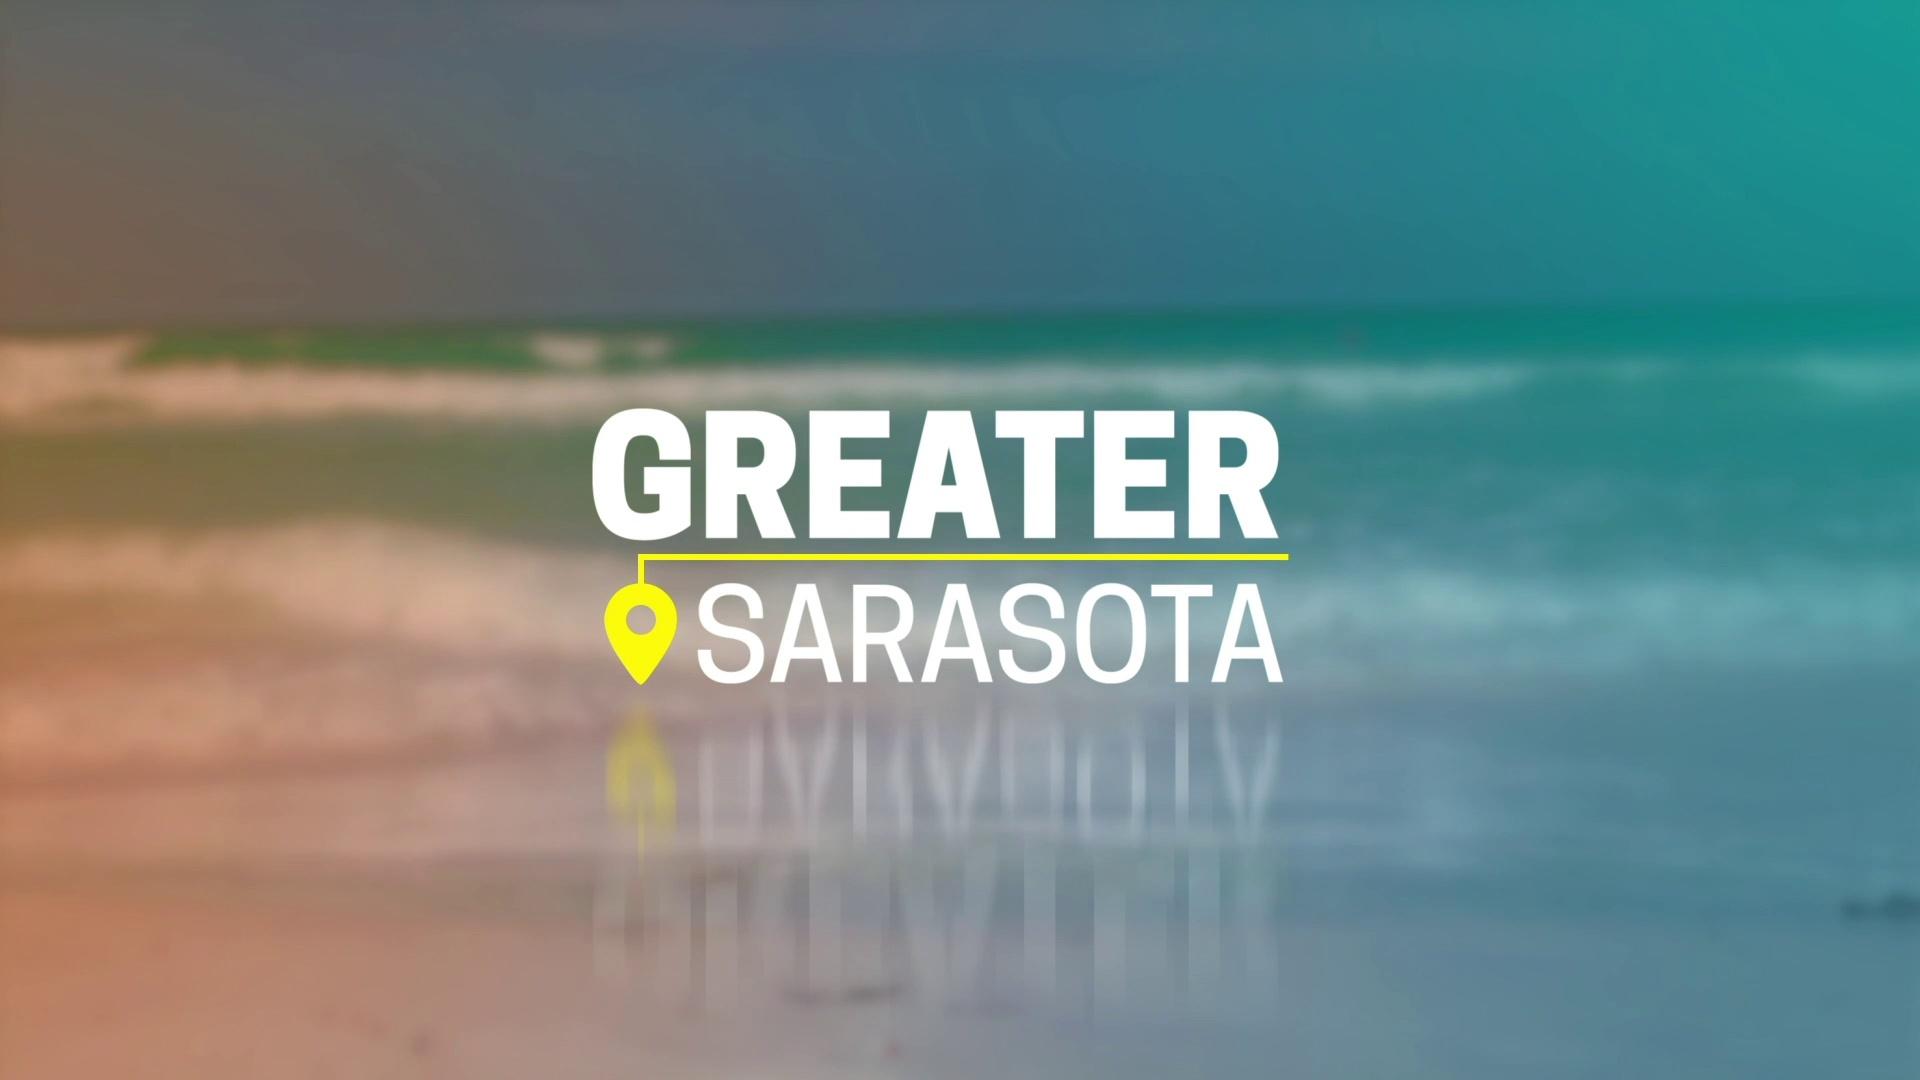 Greater Sarasota Season 1 Special